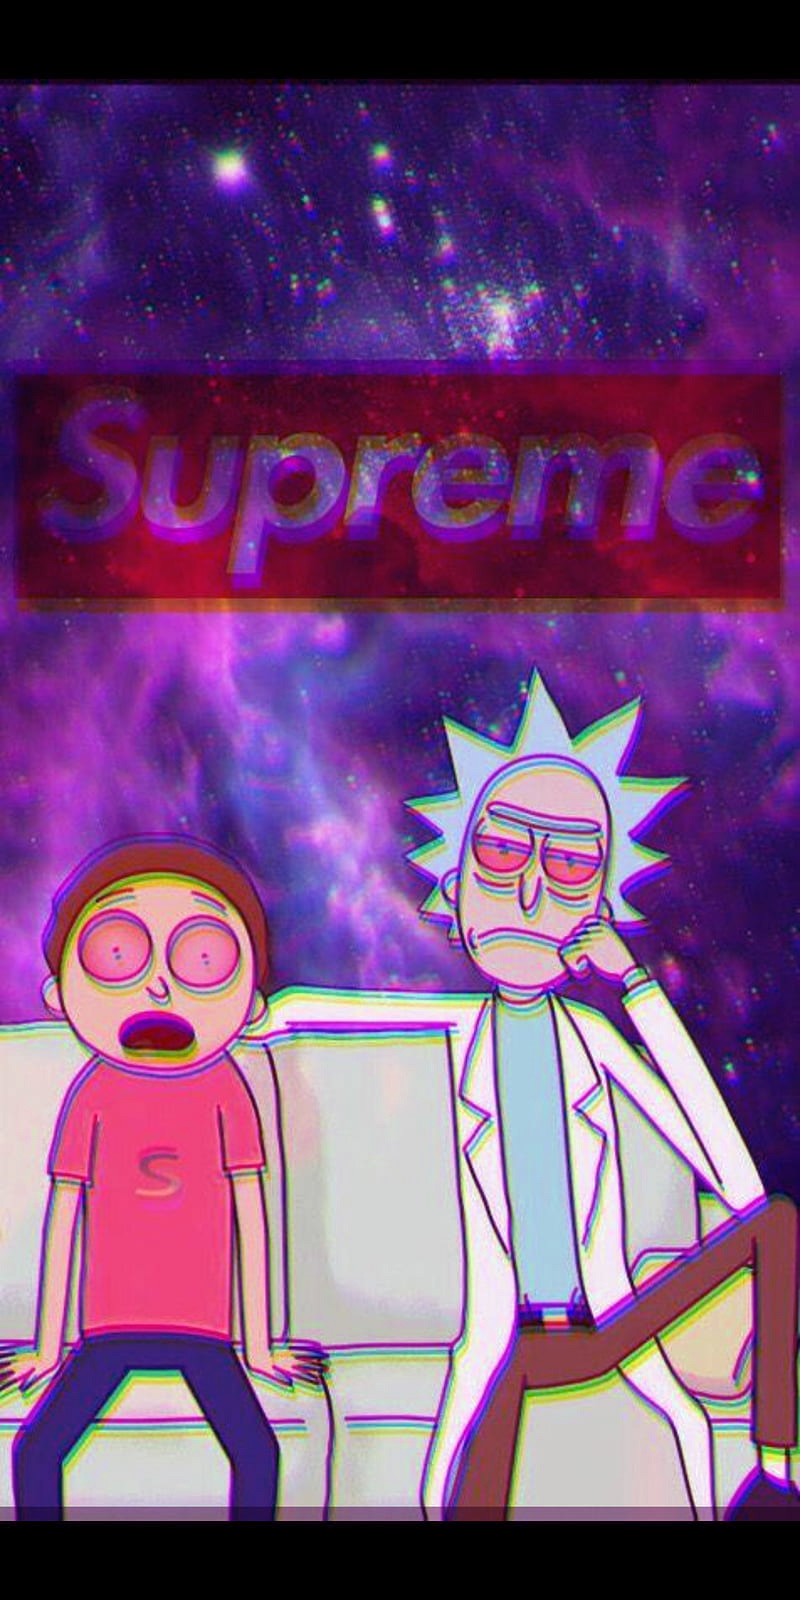 Rick and Morty 4k Wallpaper